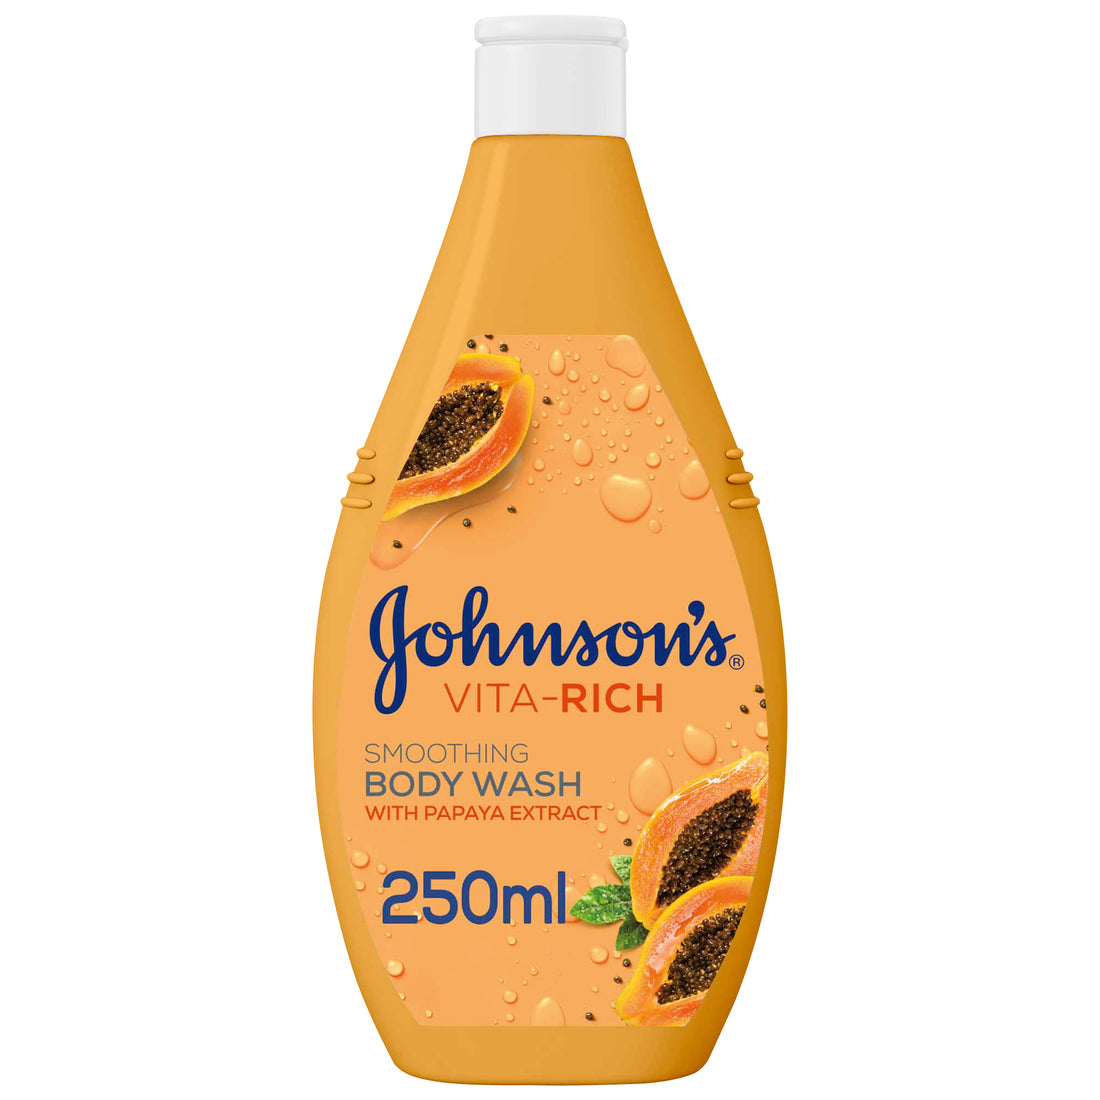 JOHNSON’S Body Wash - Vita-Rich, Smoothing Papaya, 250ml